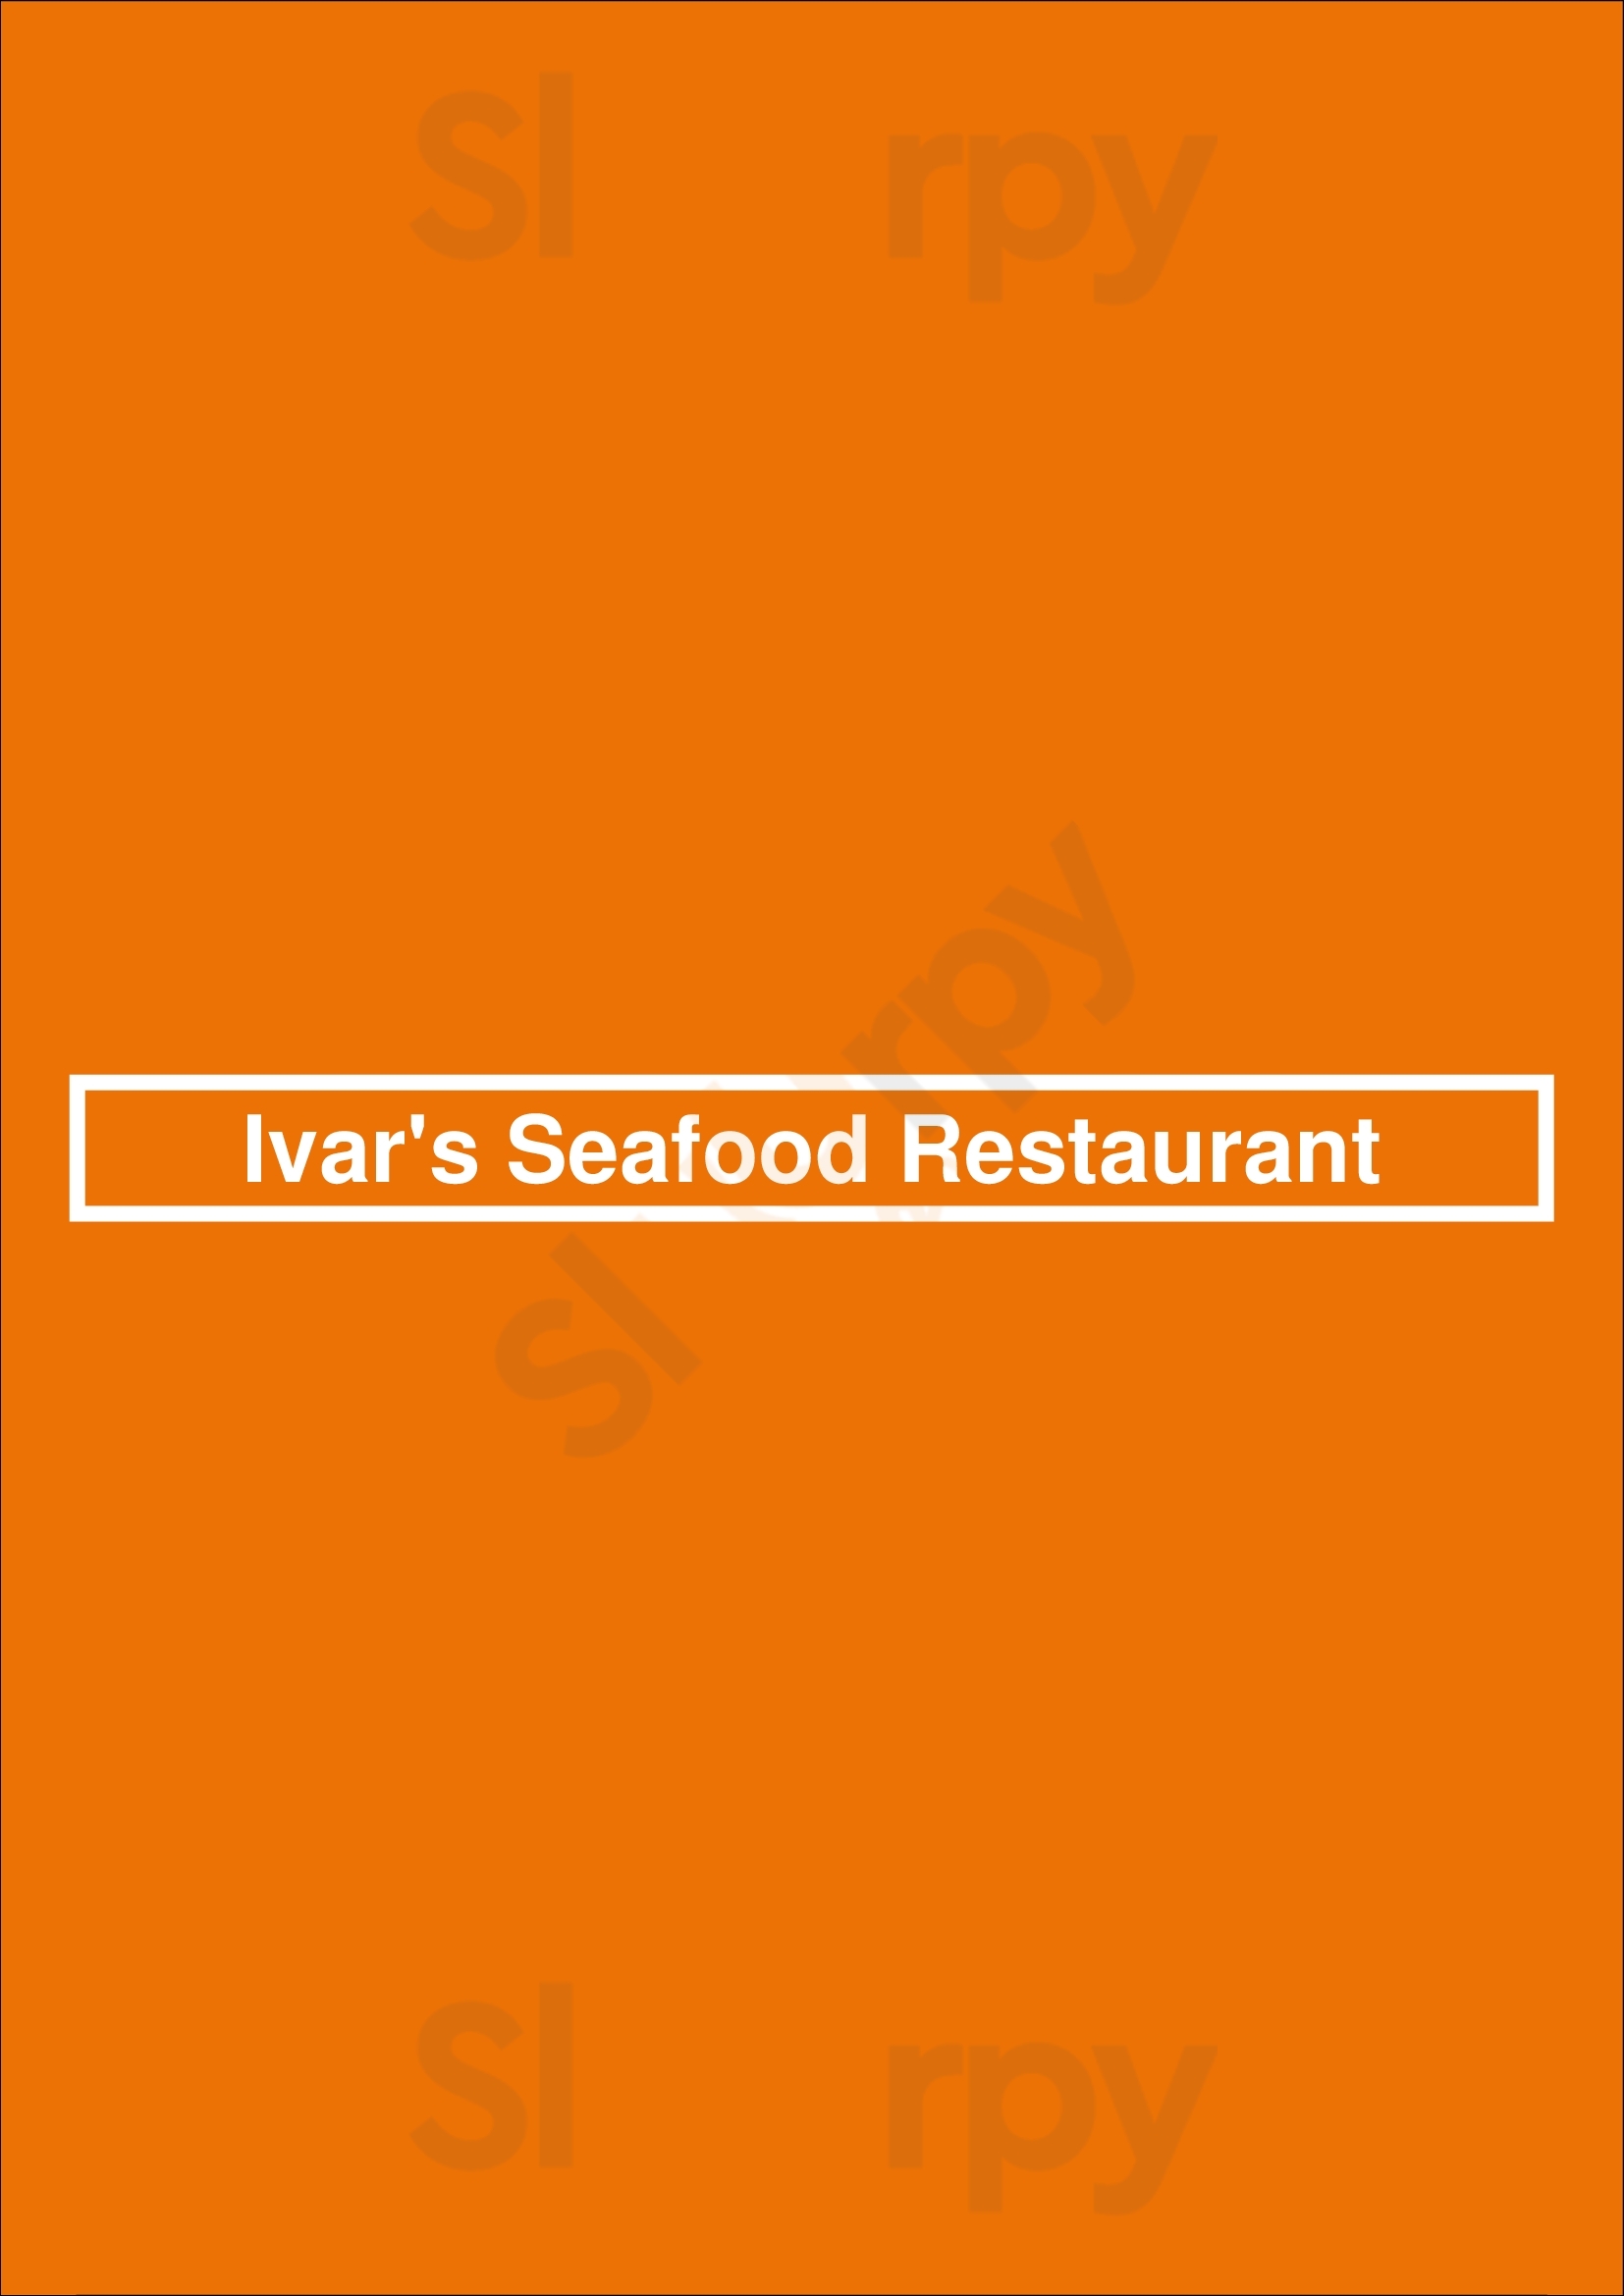 Ivar's Seafood Restaurant Lakewood Menu - 1